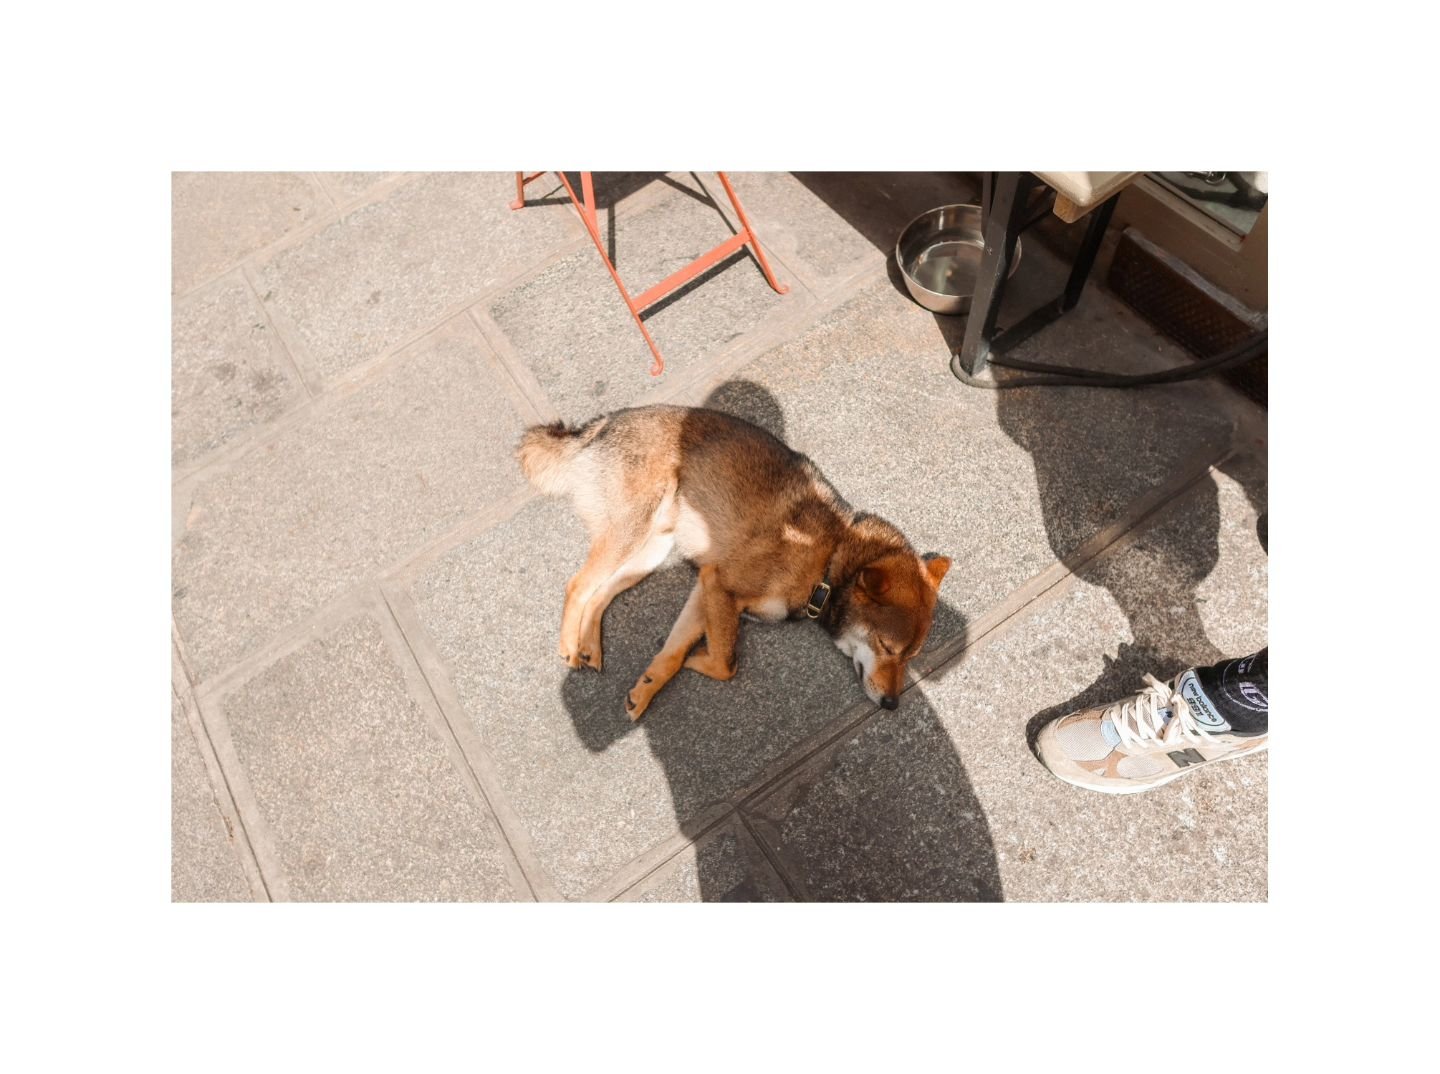 Un coin d'ombre #paris #street #sunnyday #sunlight #dog #shibainu #people #shadow #bw #photography @jey__m